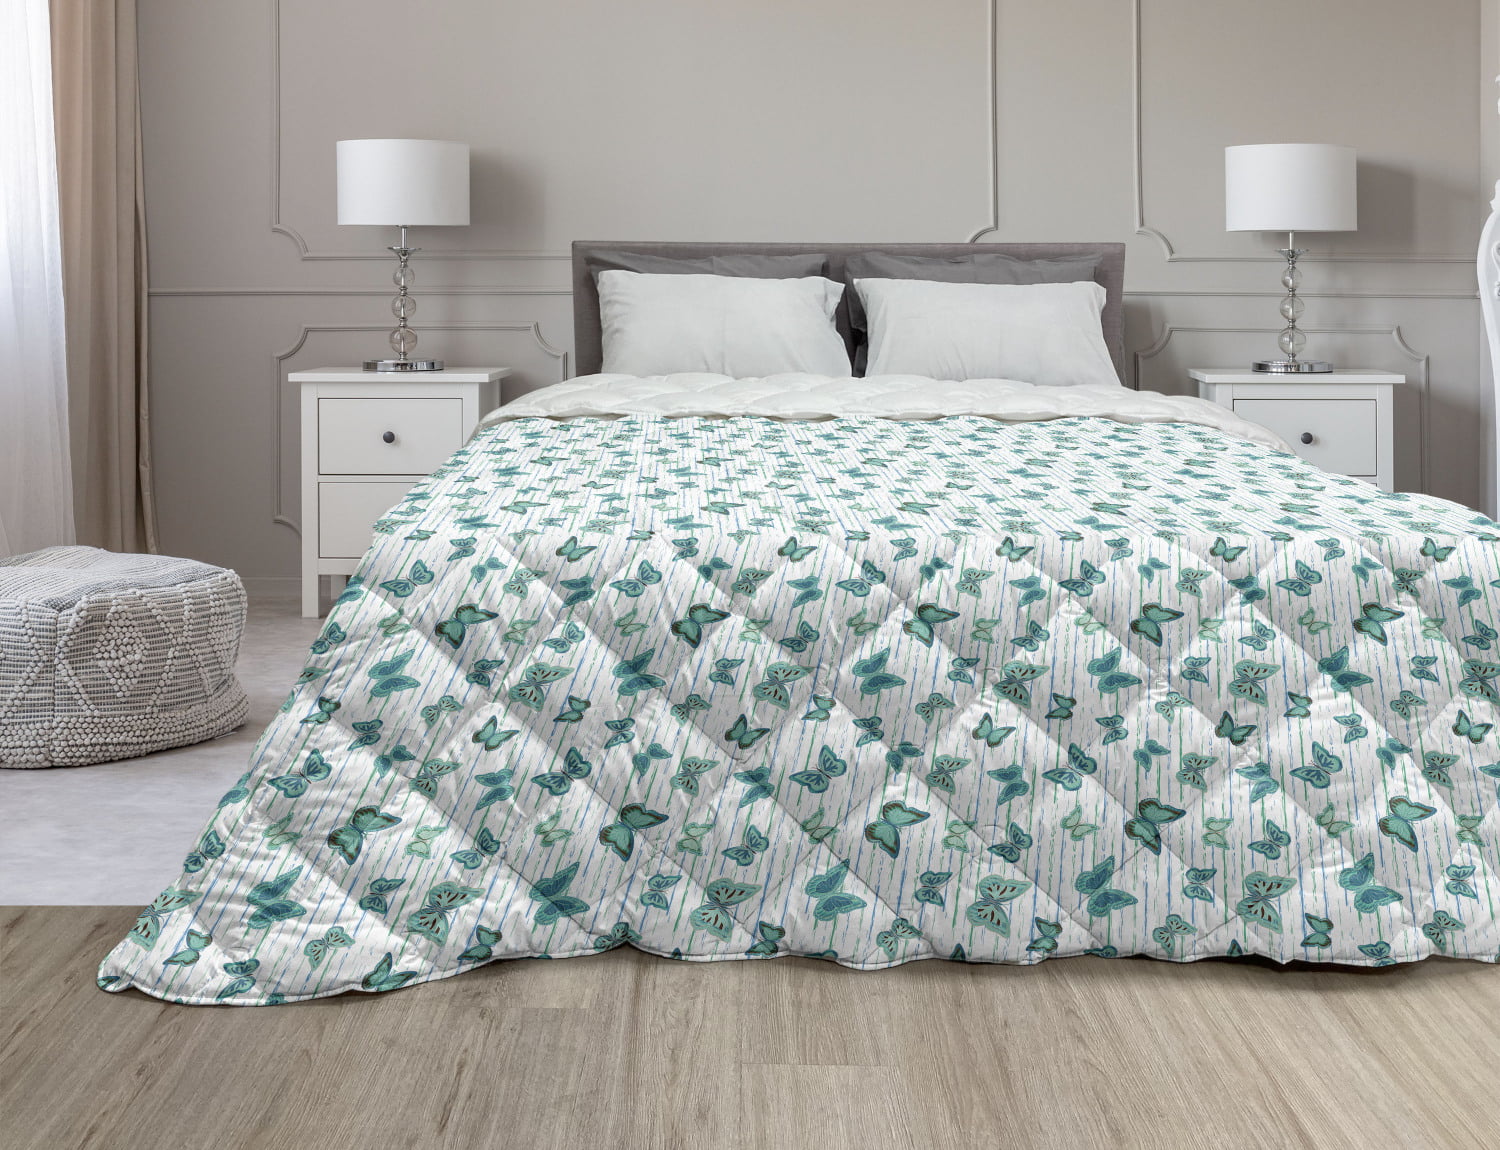 Details about   Mandala Quilted Bedspread & Pillow Shams Set Flourishing Paisley Print 